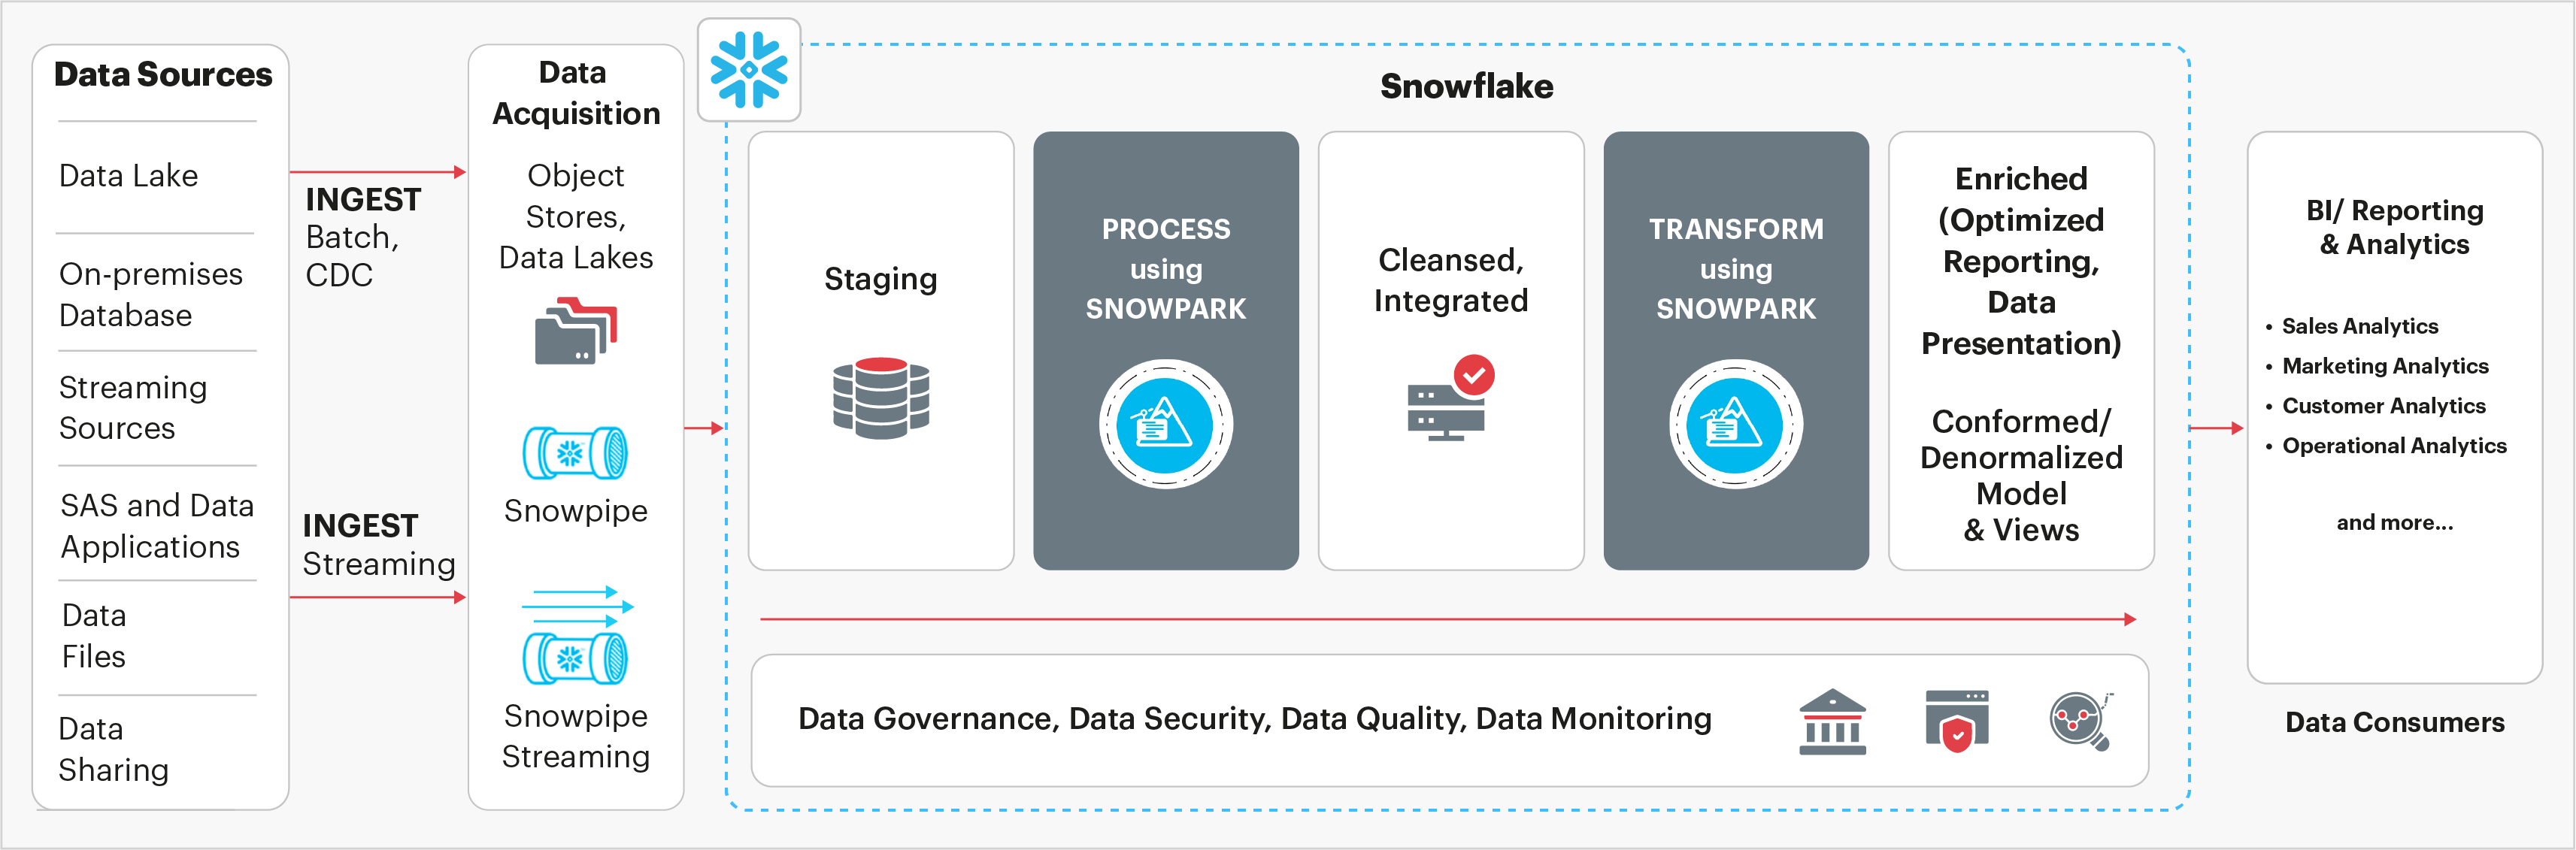 Data Architecture on Snowflake